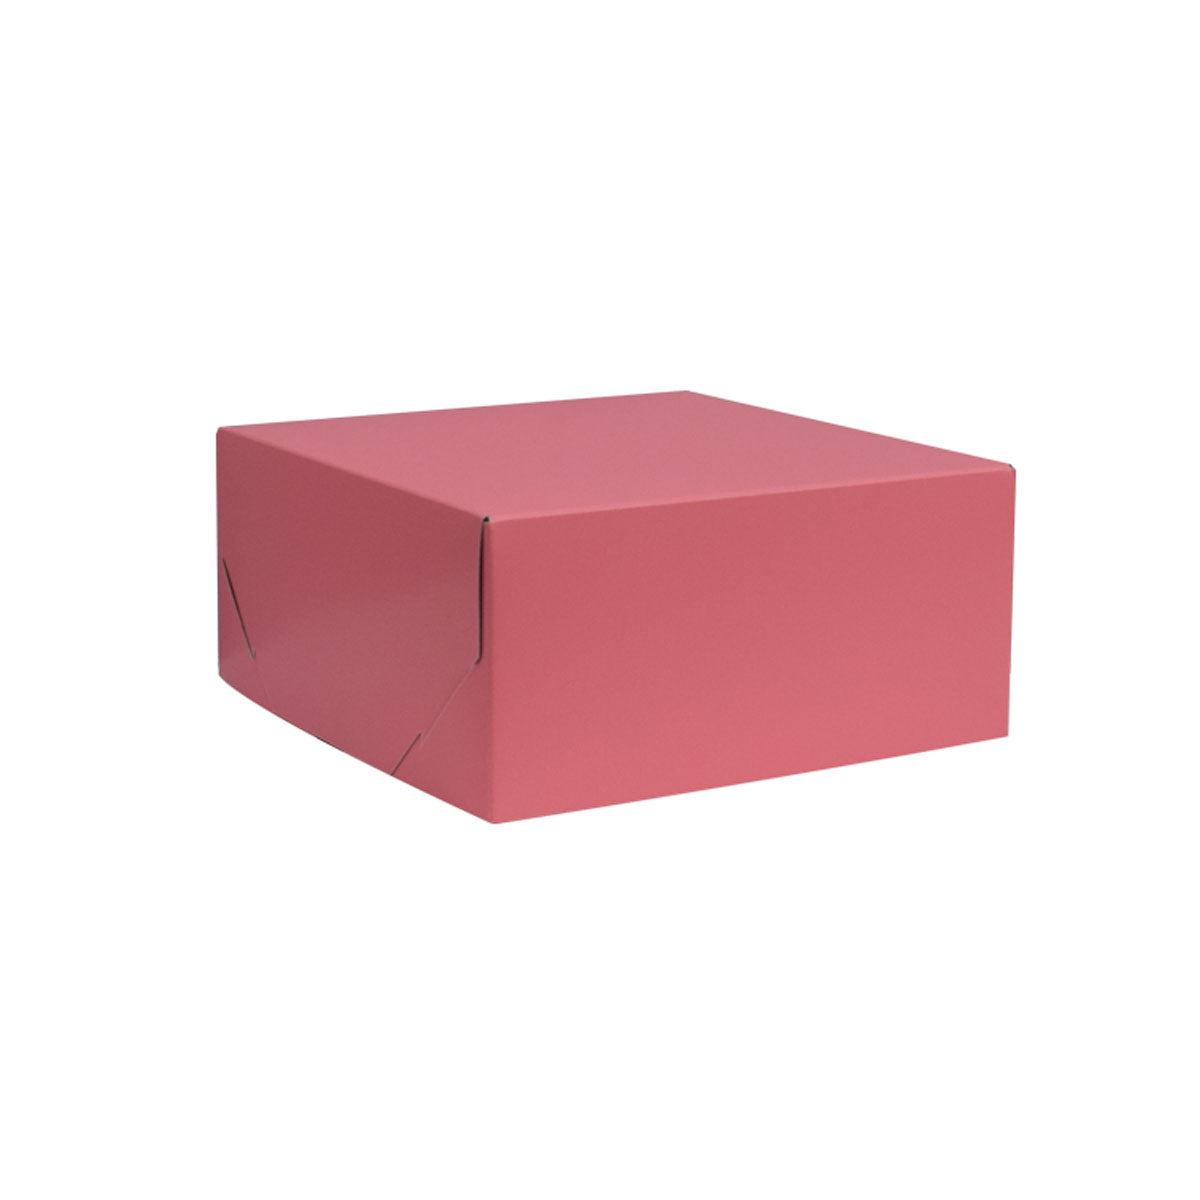 2 Piece Gift Box Coral Chiffon 305x305x127mm